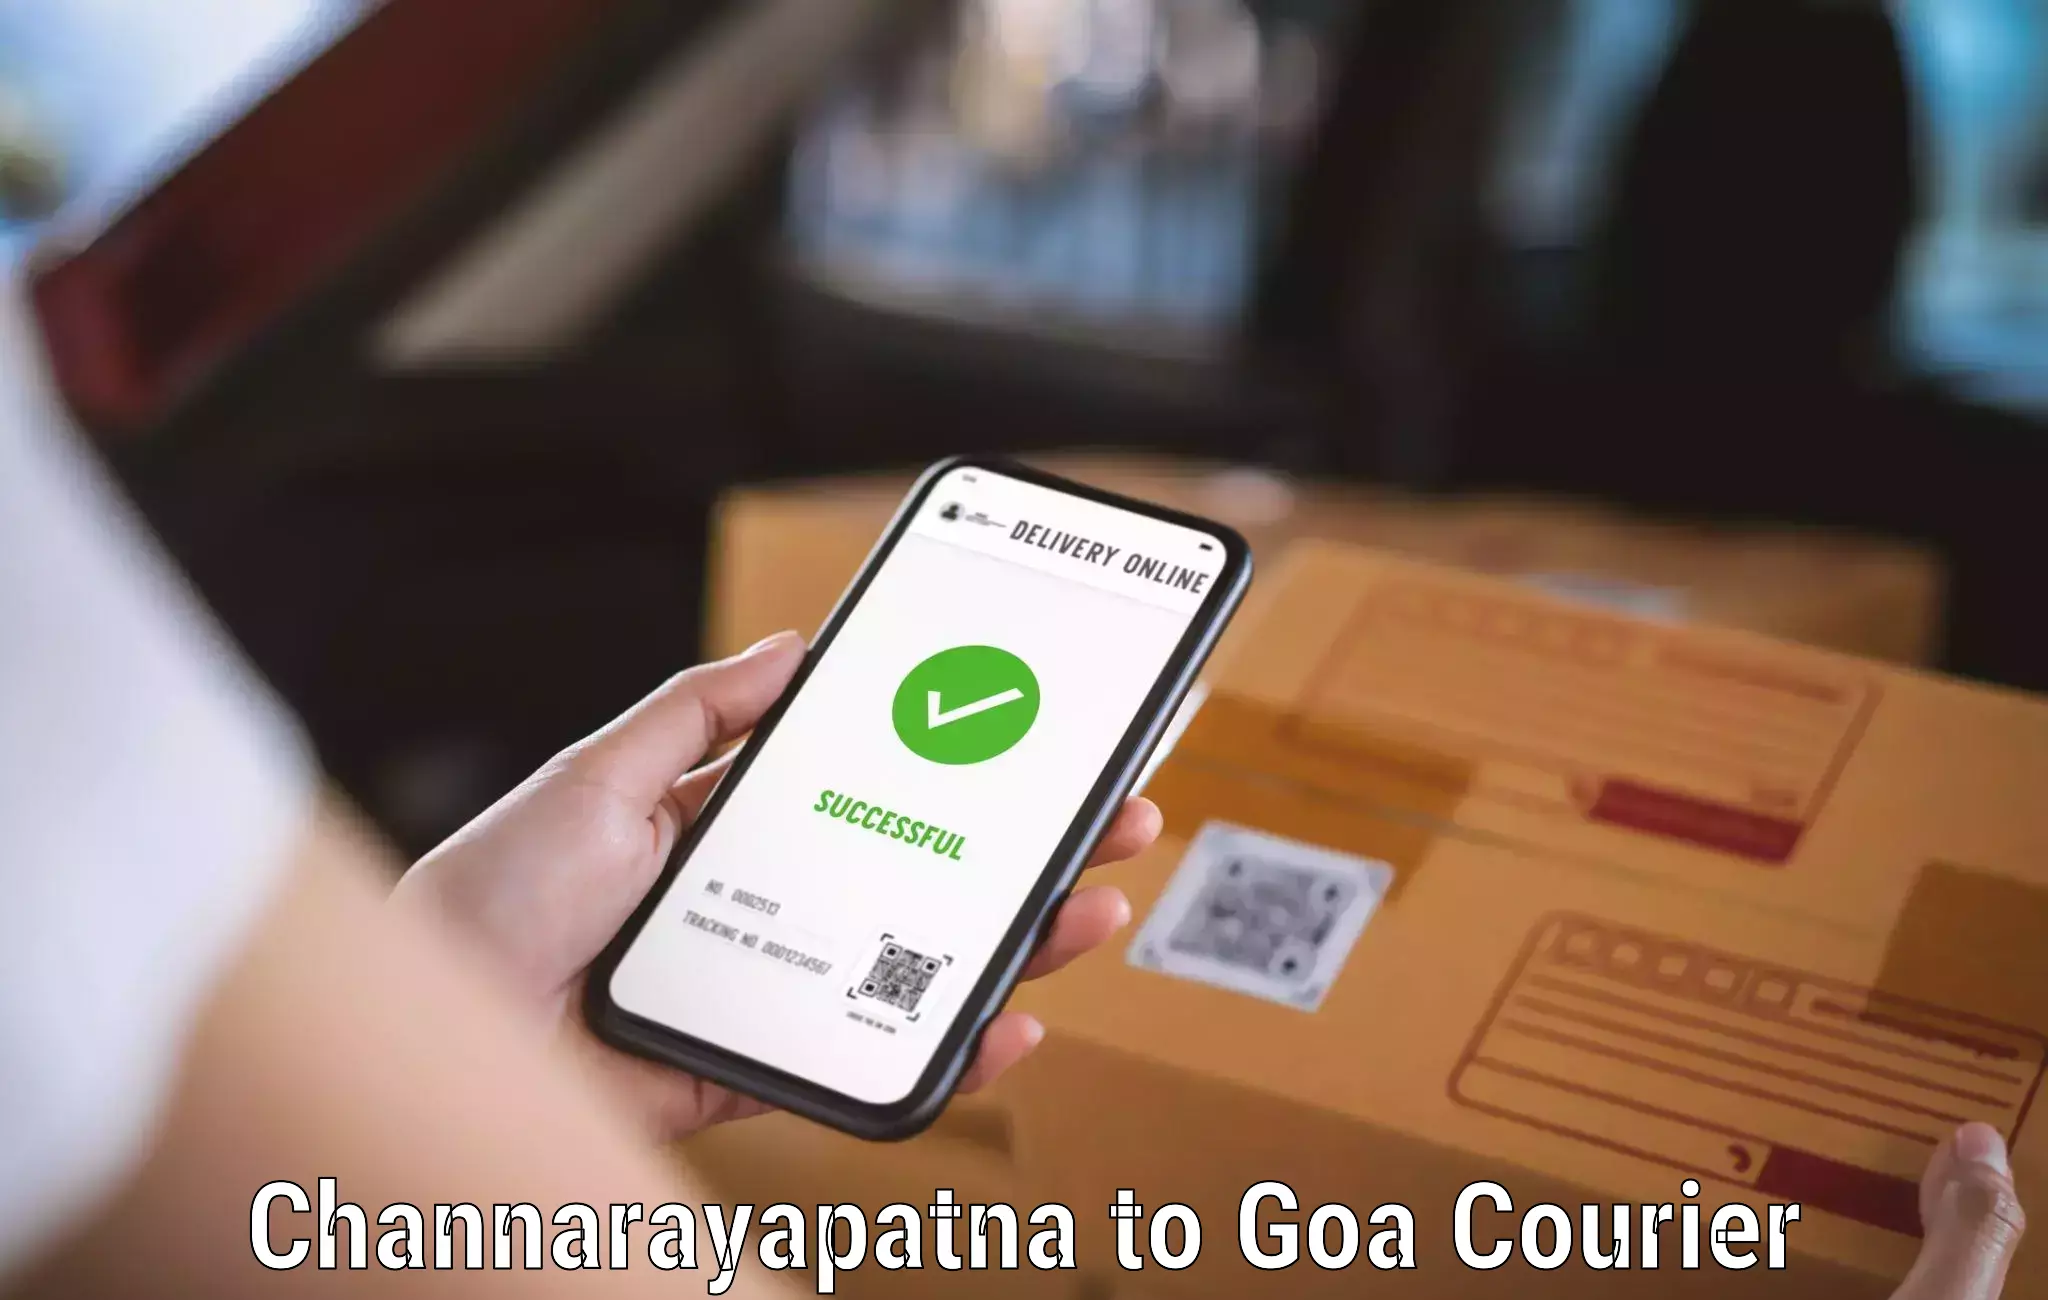 Comprehensive shipping network Channarayapatna to South Goa